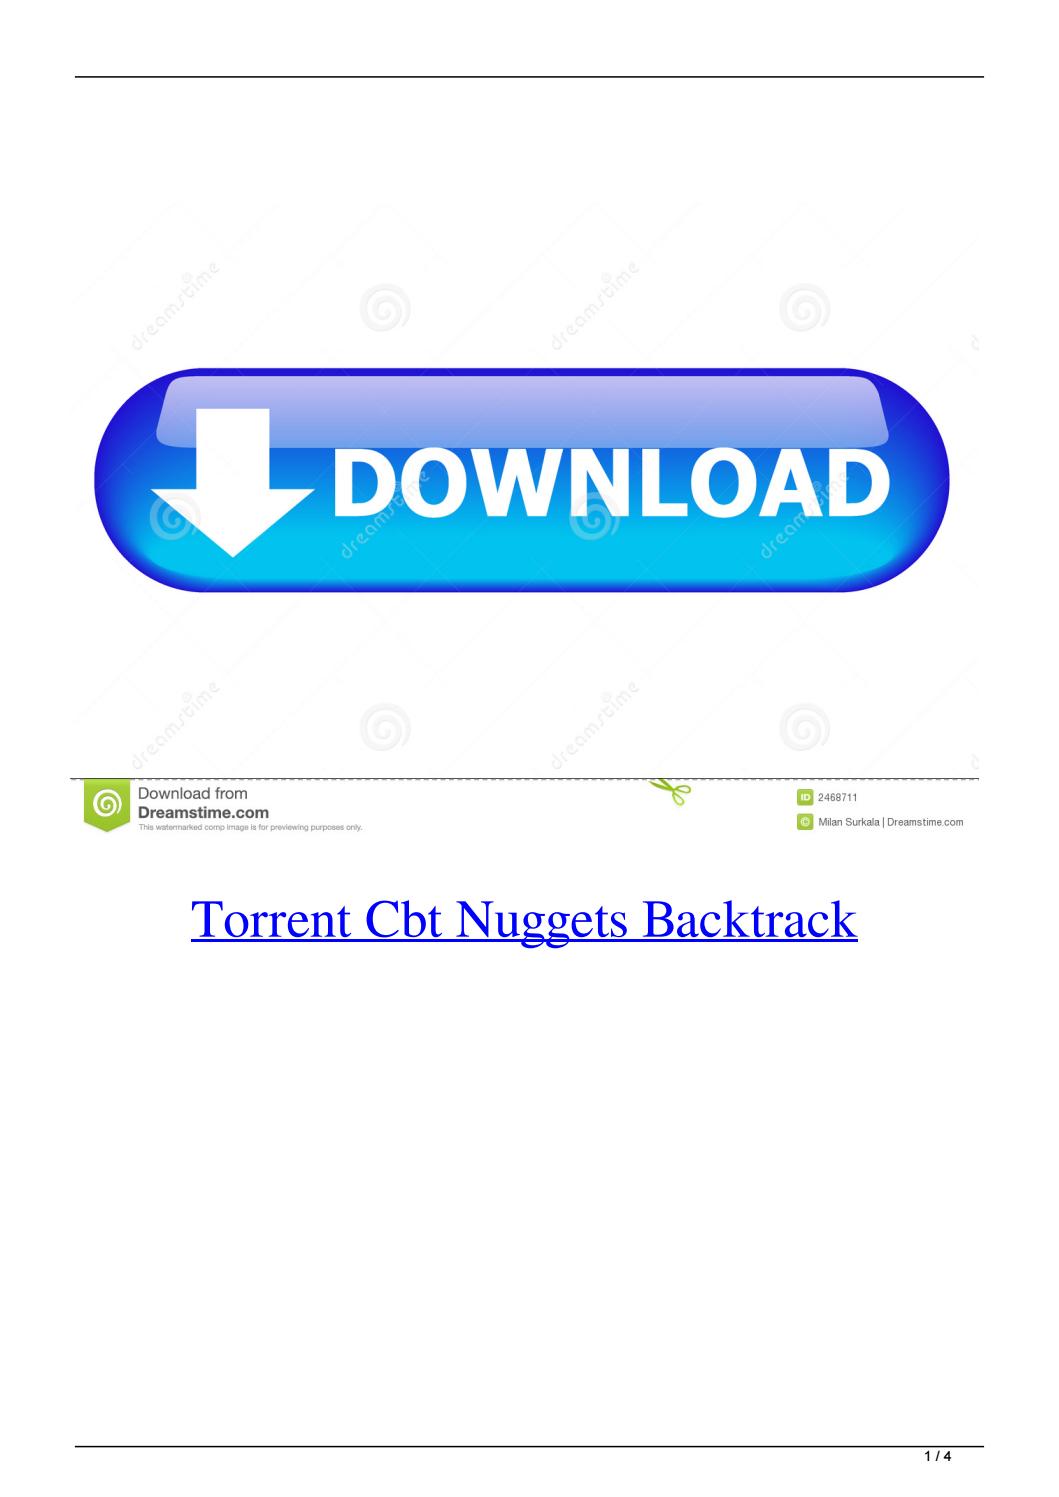 voip videos cbt nuggets torrent download